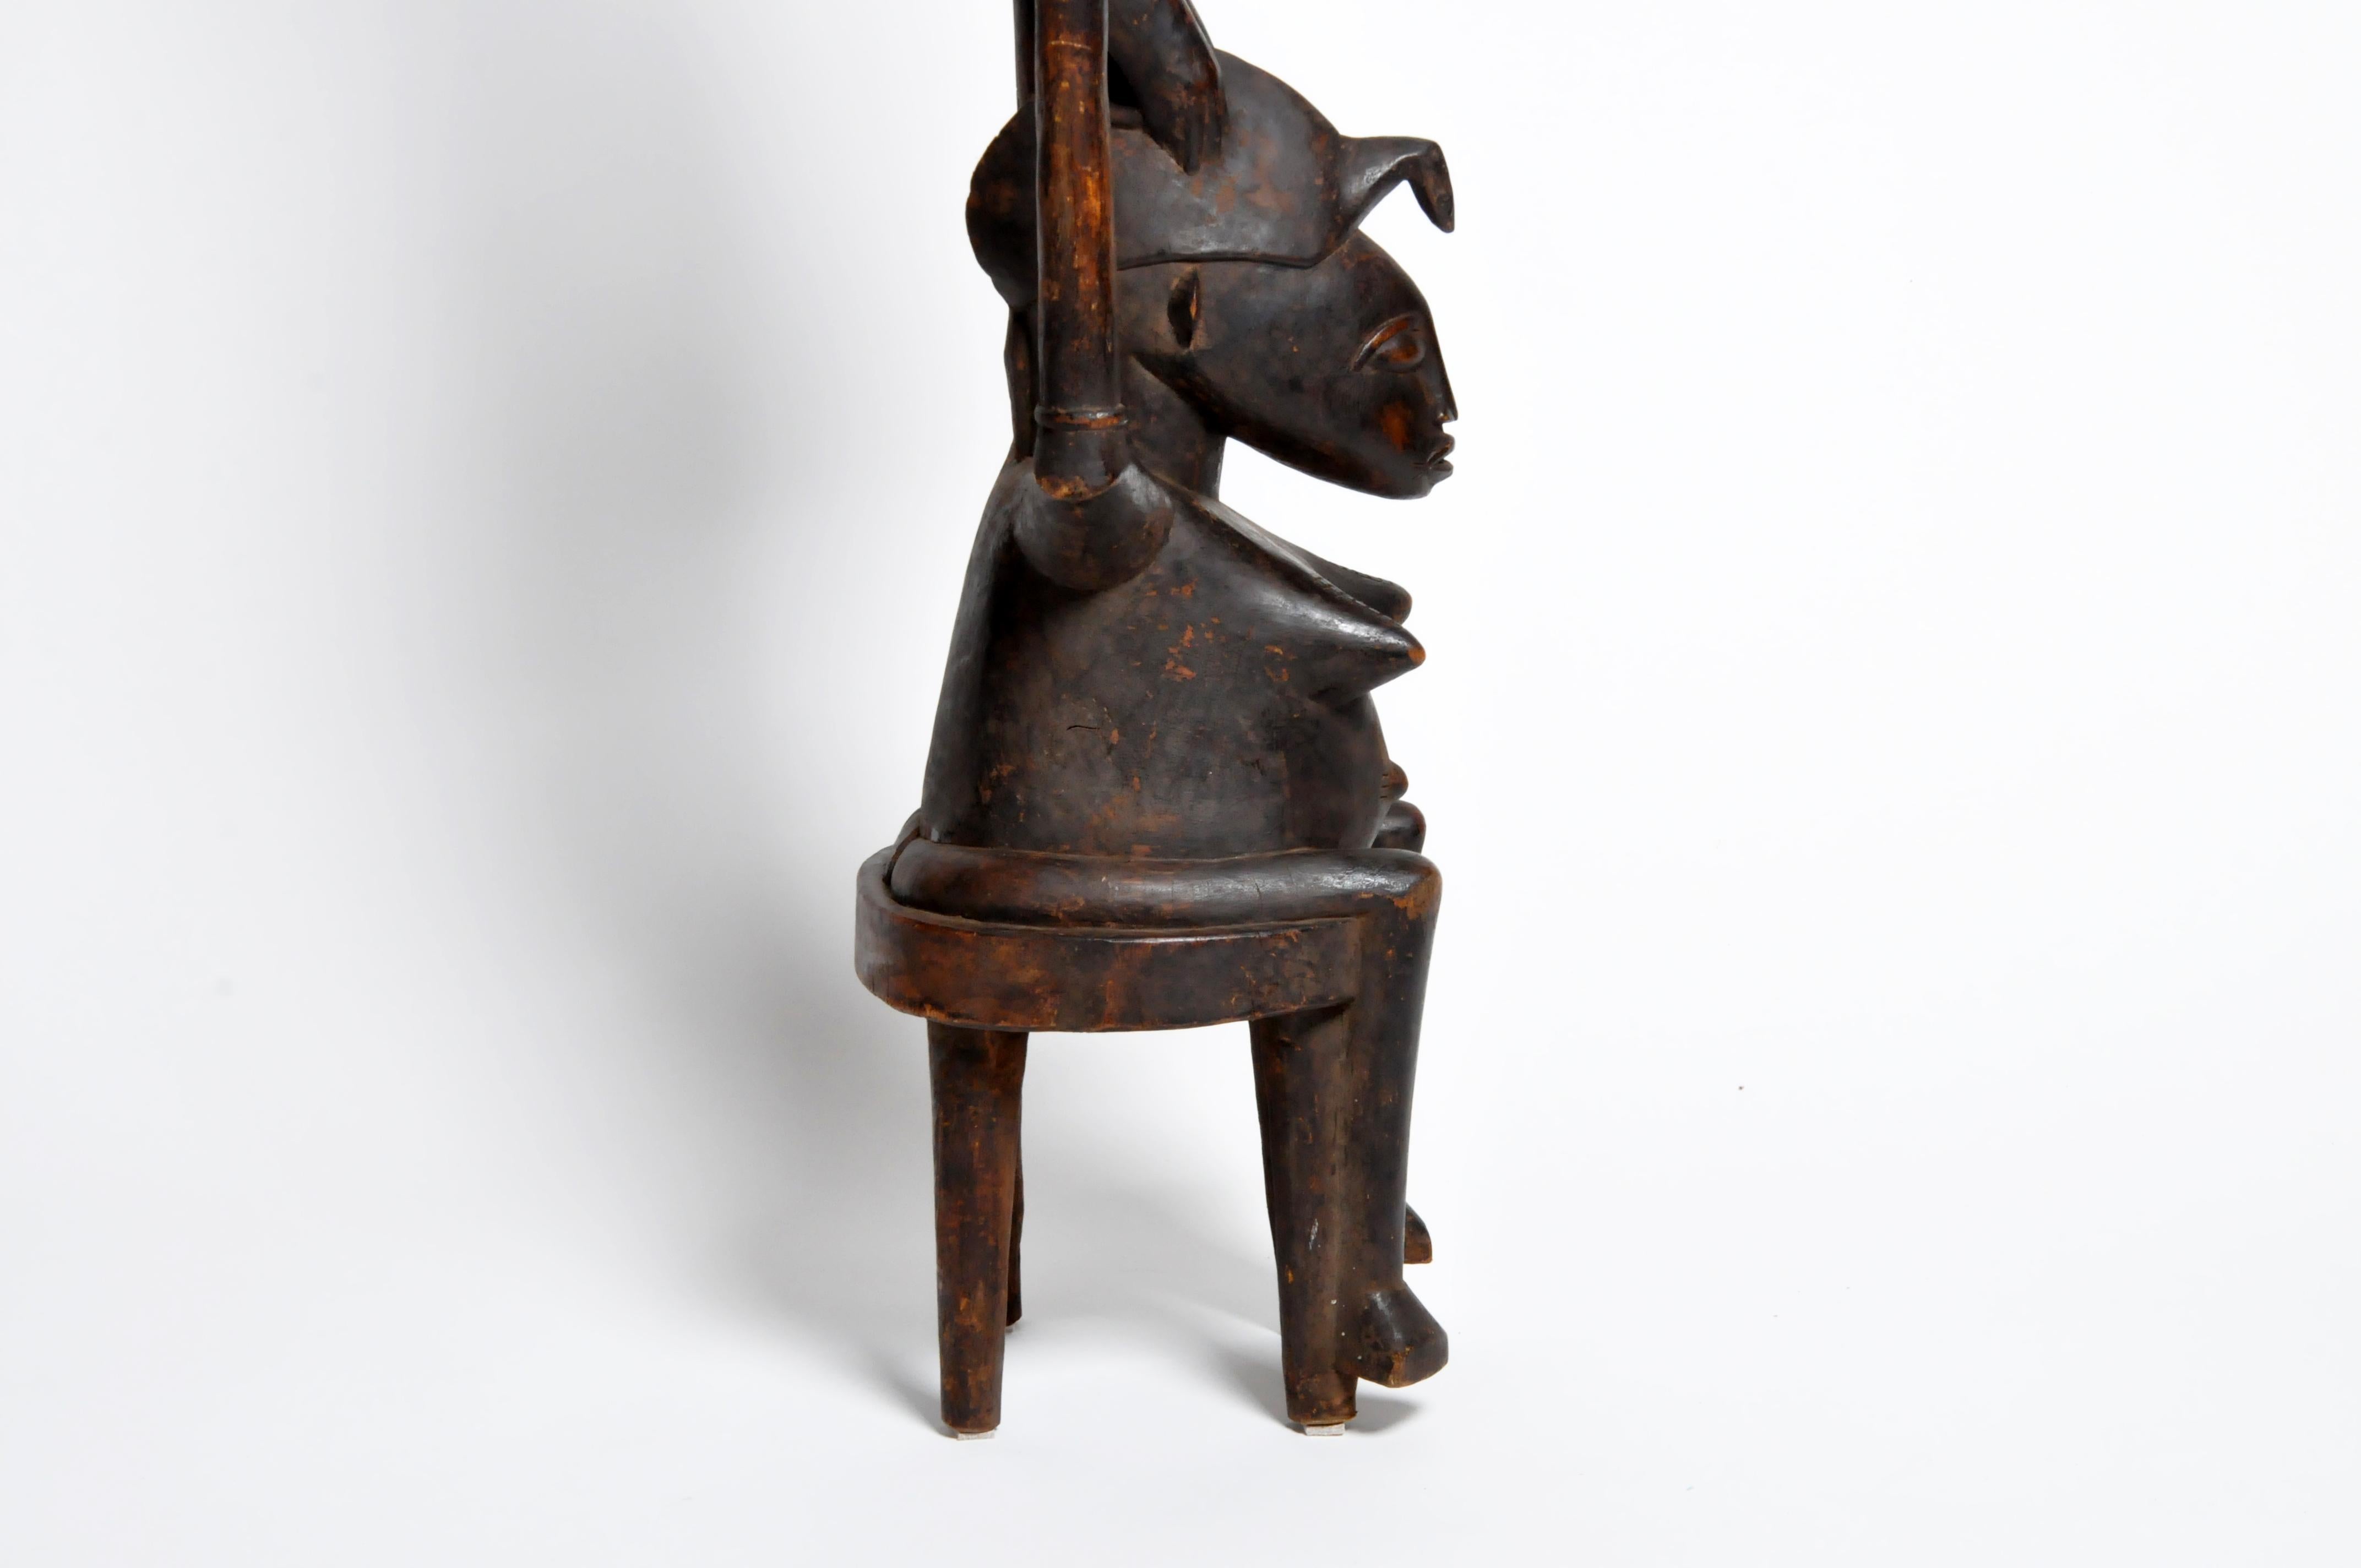 Small Yoruba Style Figure of a Woman Sculpture 12